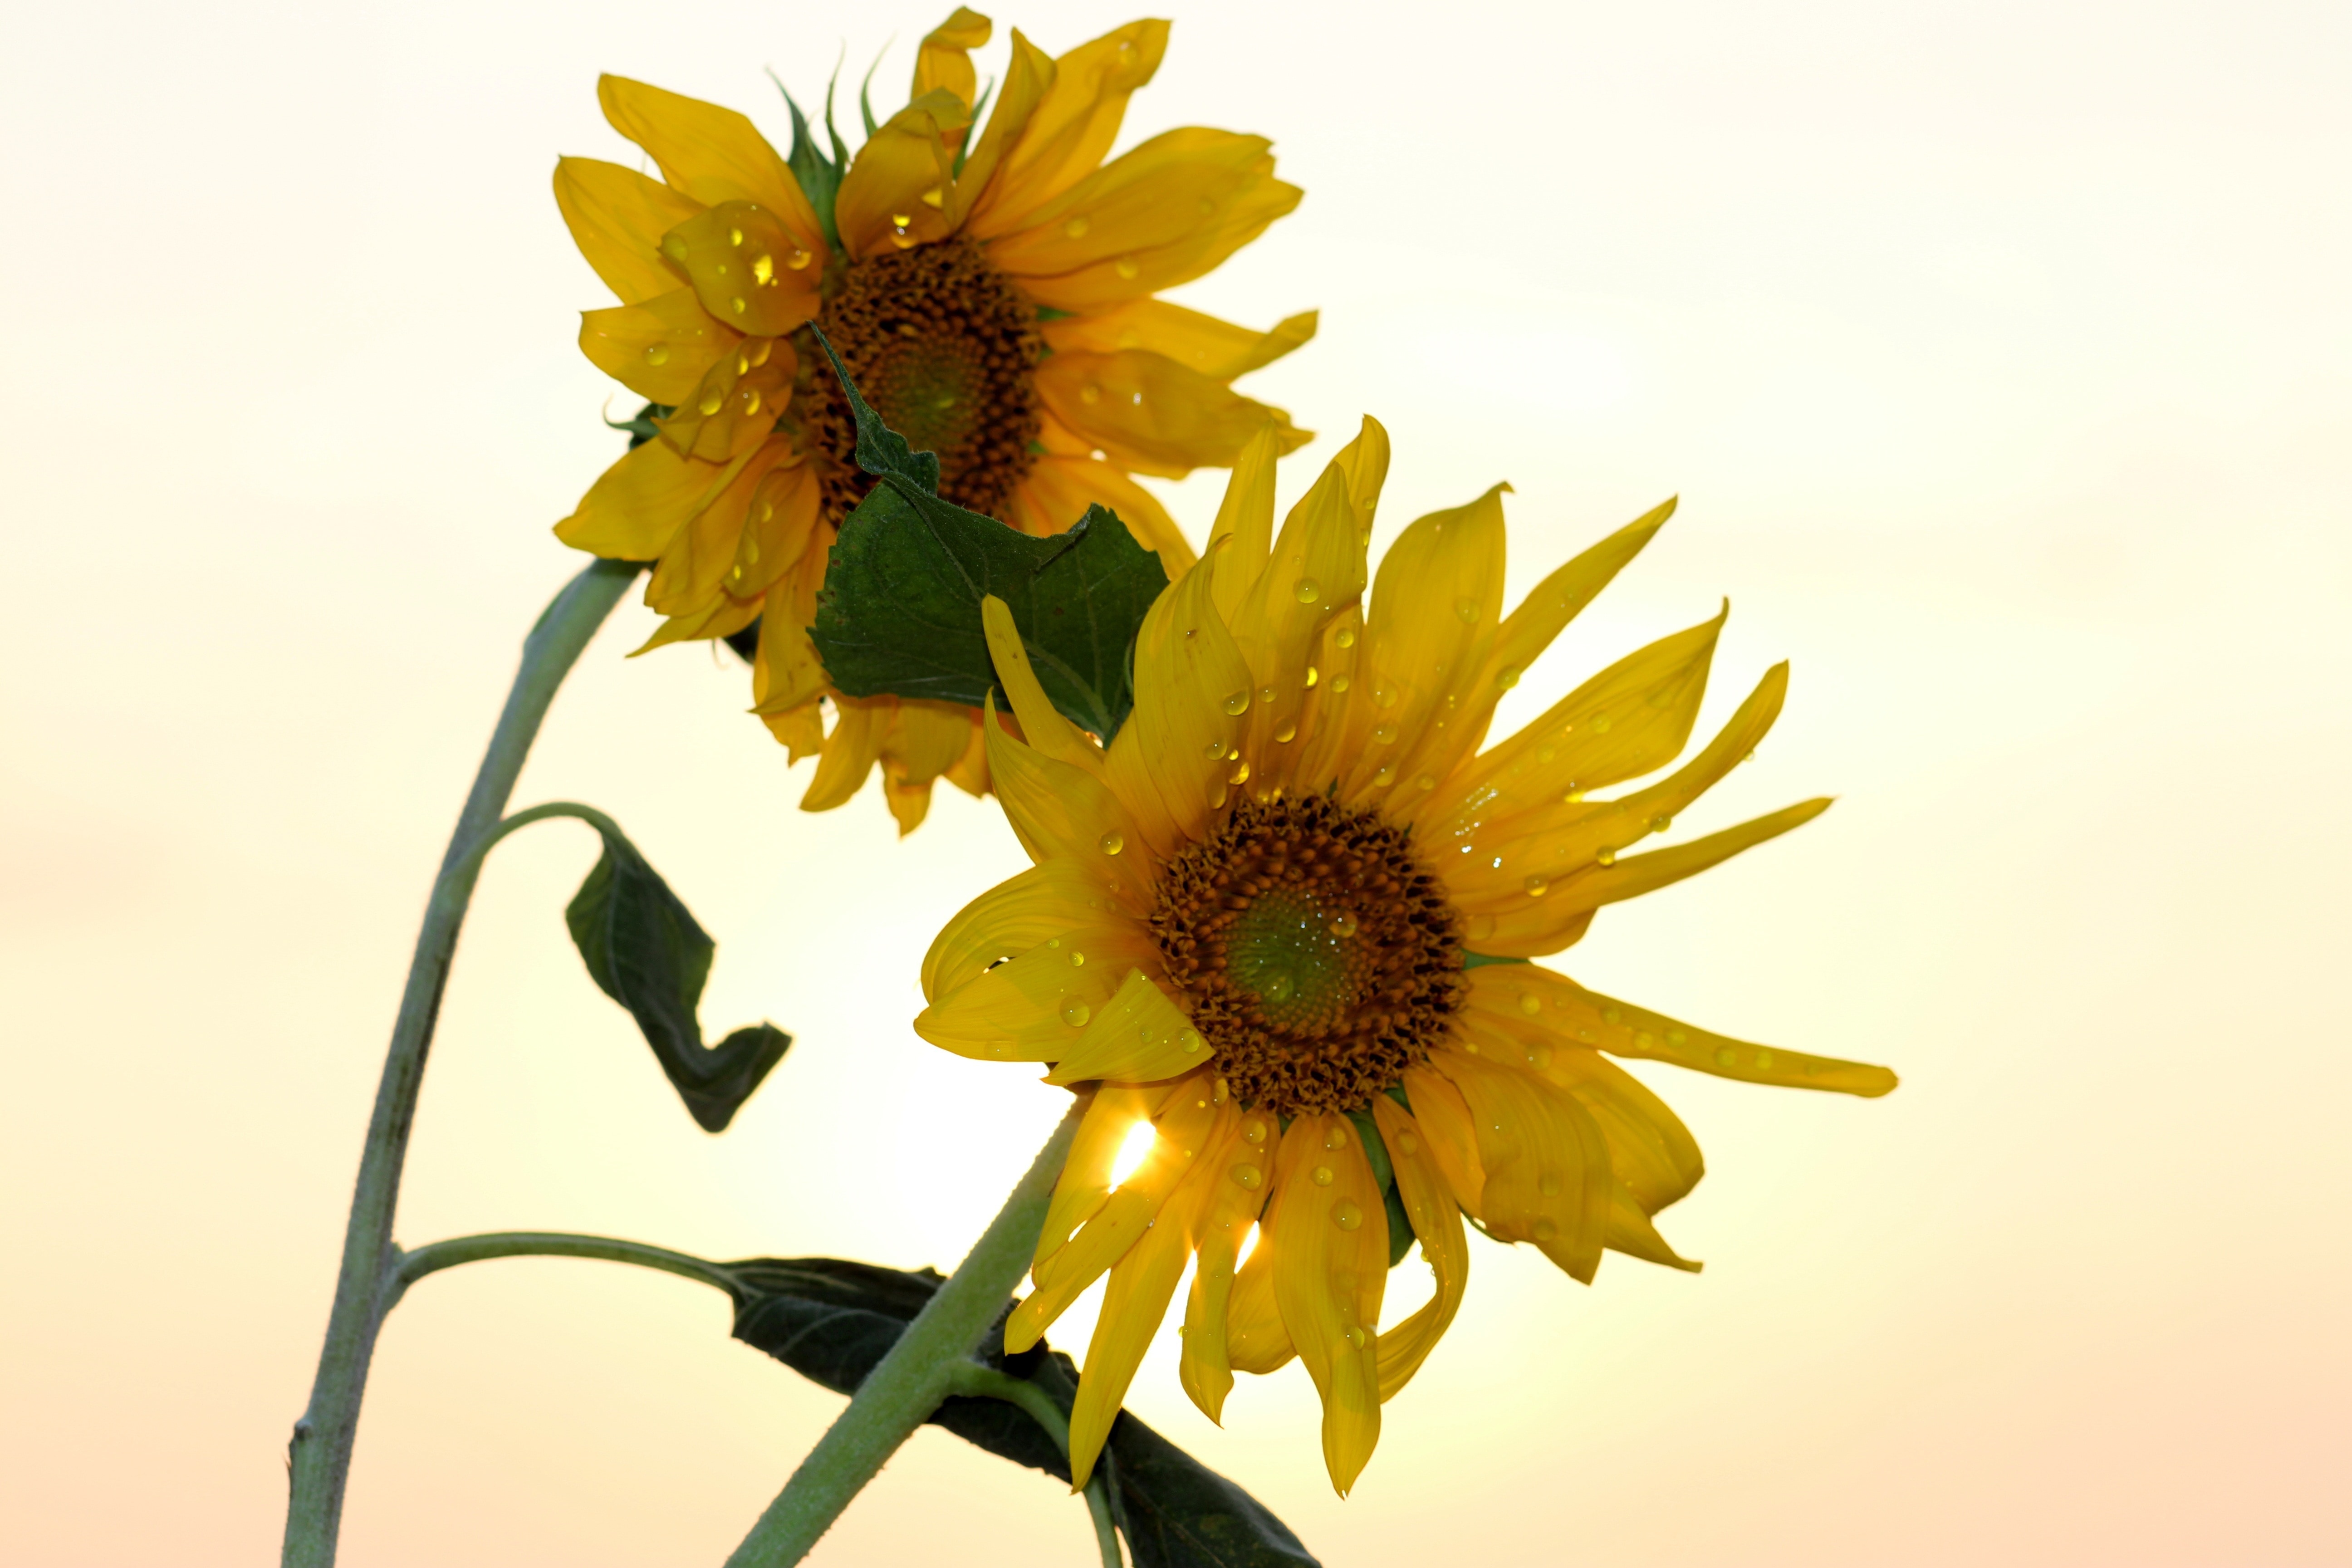 Download 2 yellow sunflower free image | Peakpx